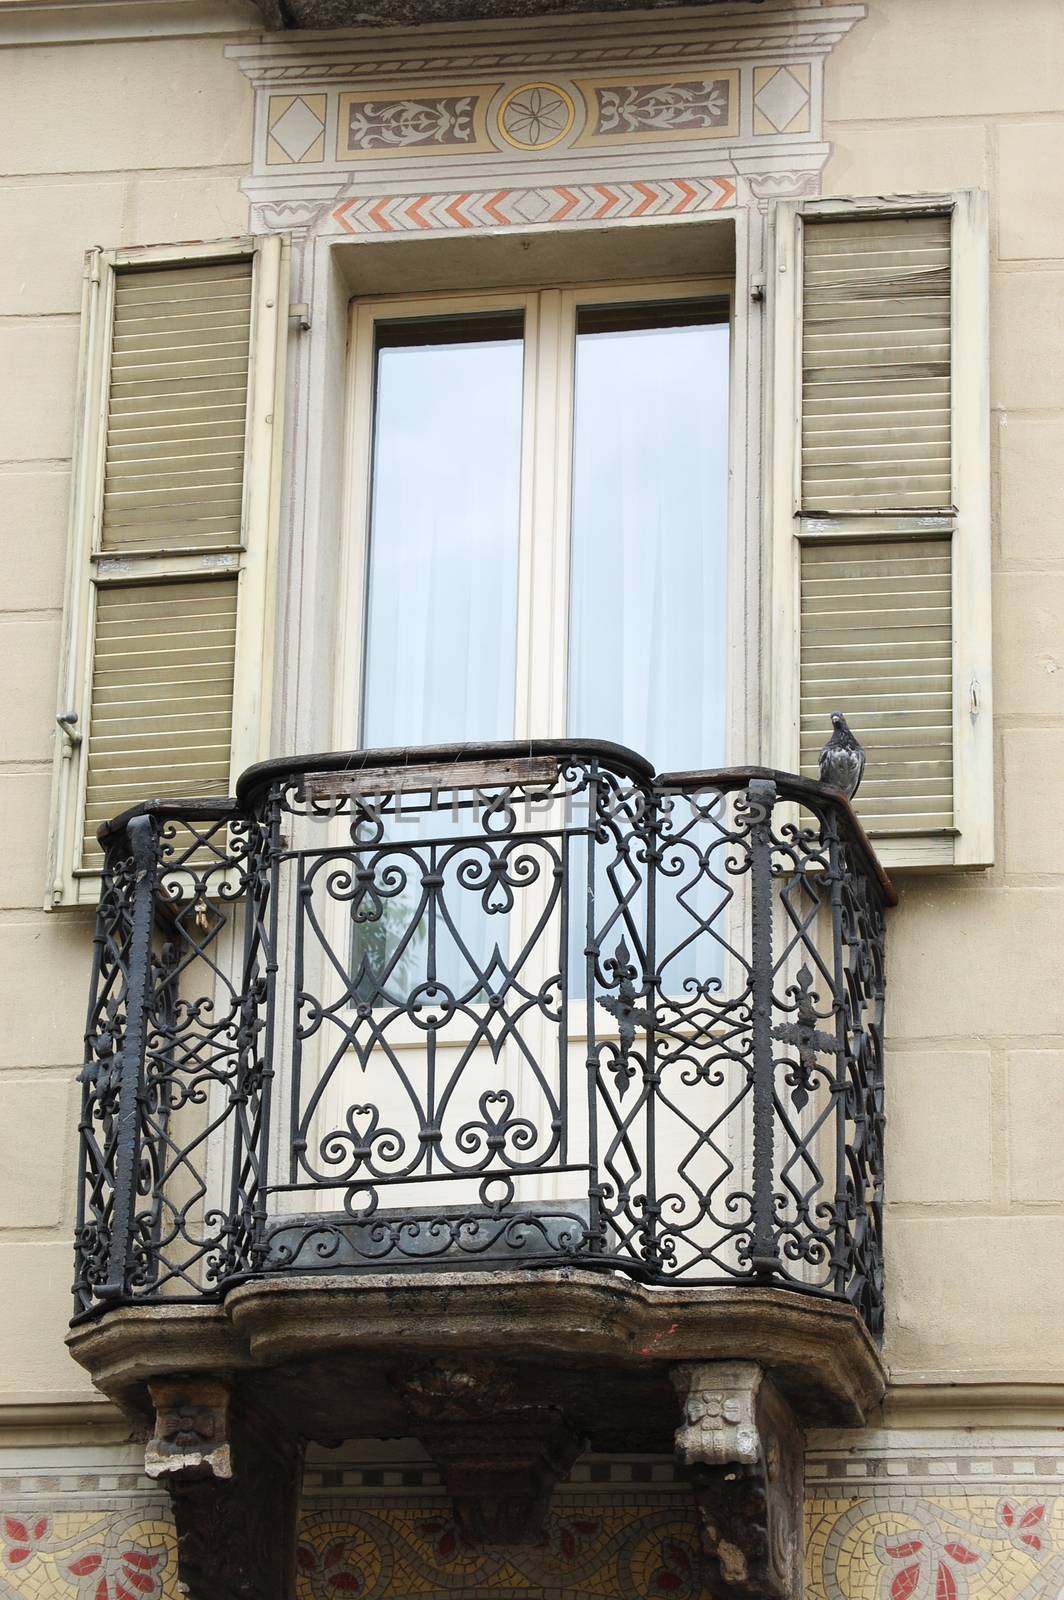 A balcony in an old European house